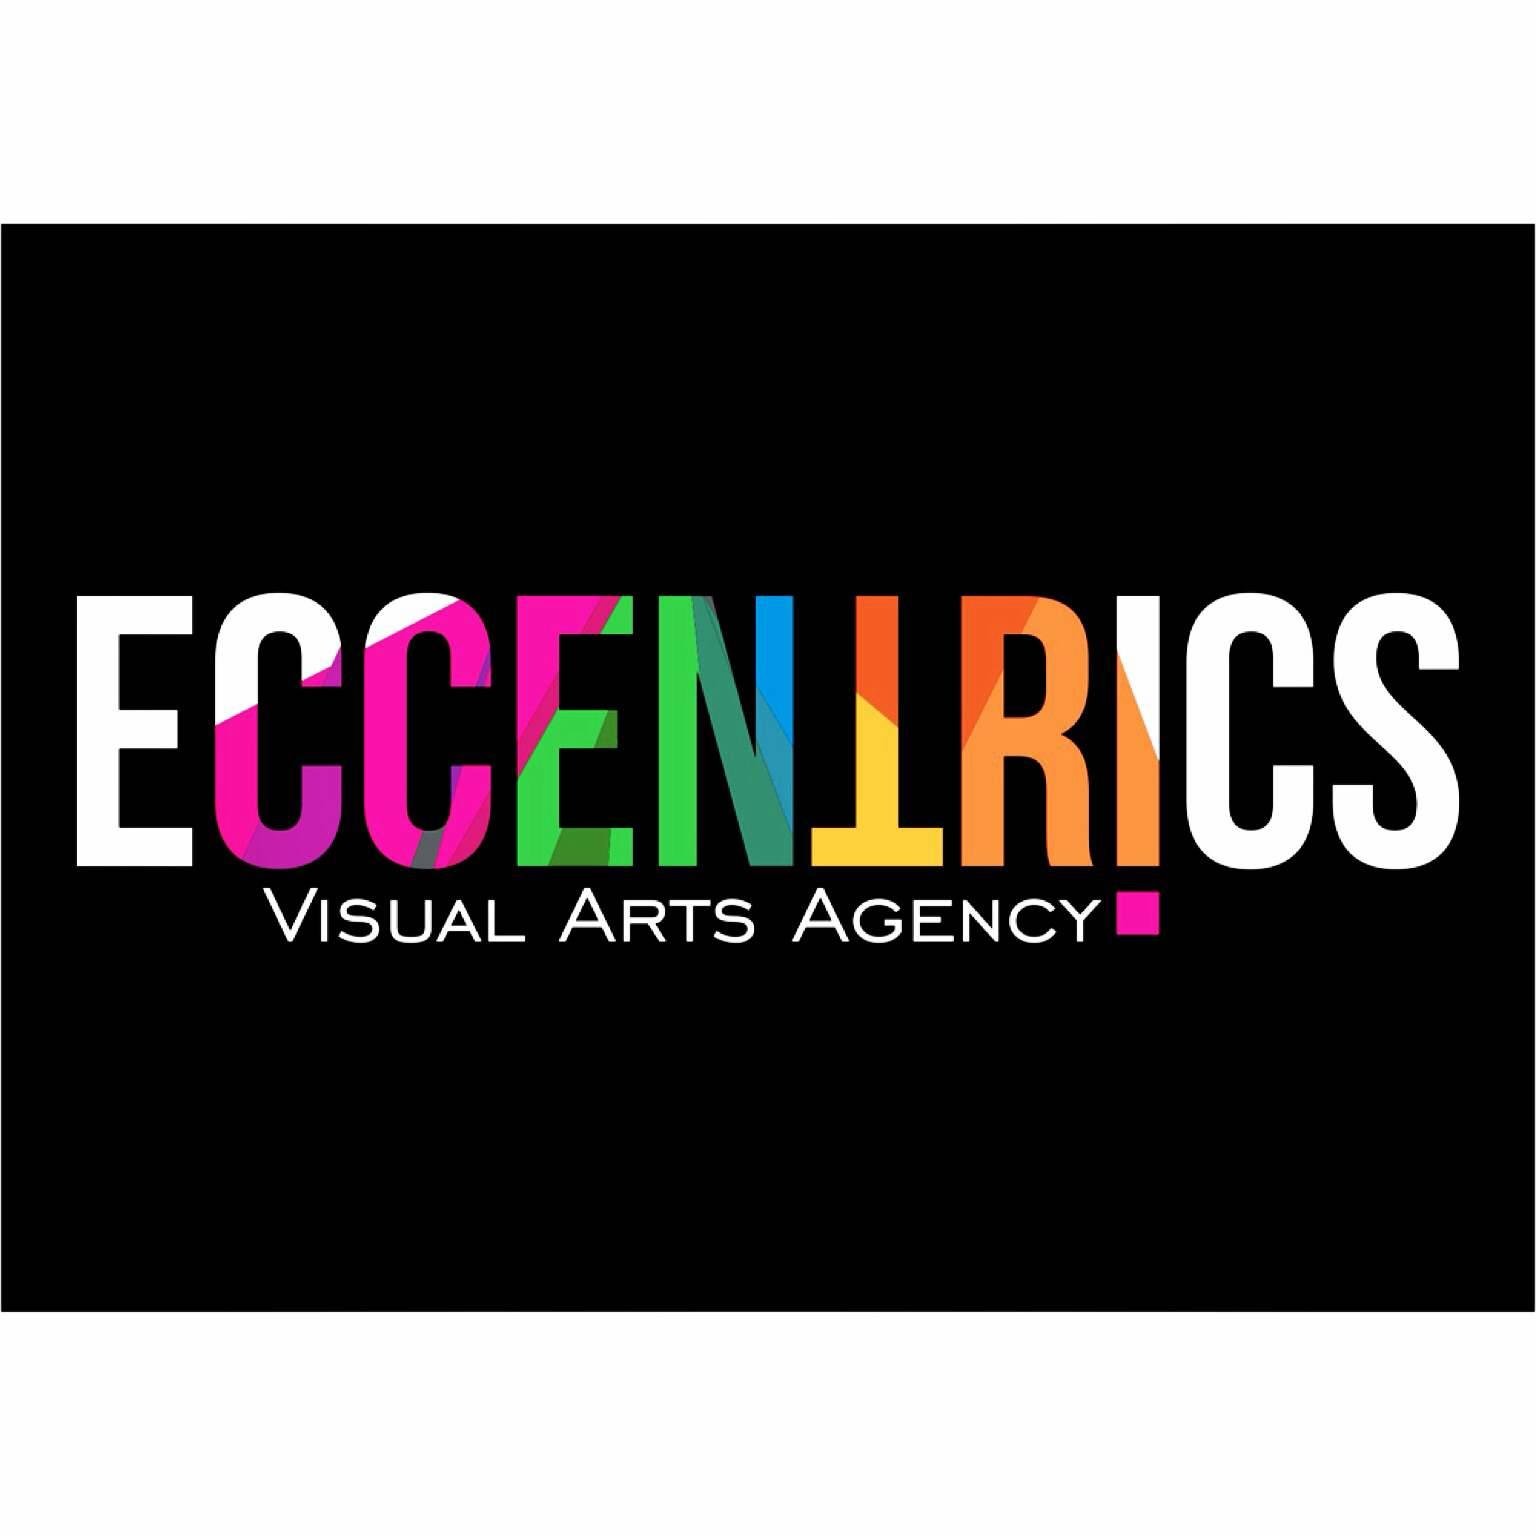 Eccentrics Visual Arts Agency